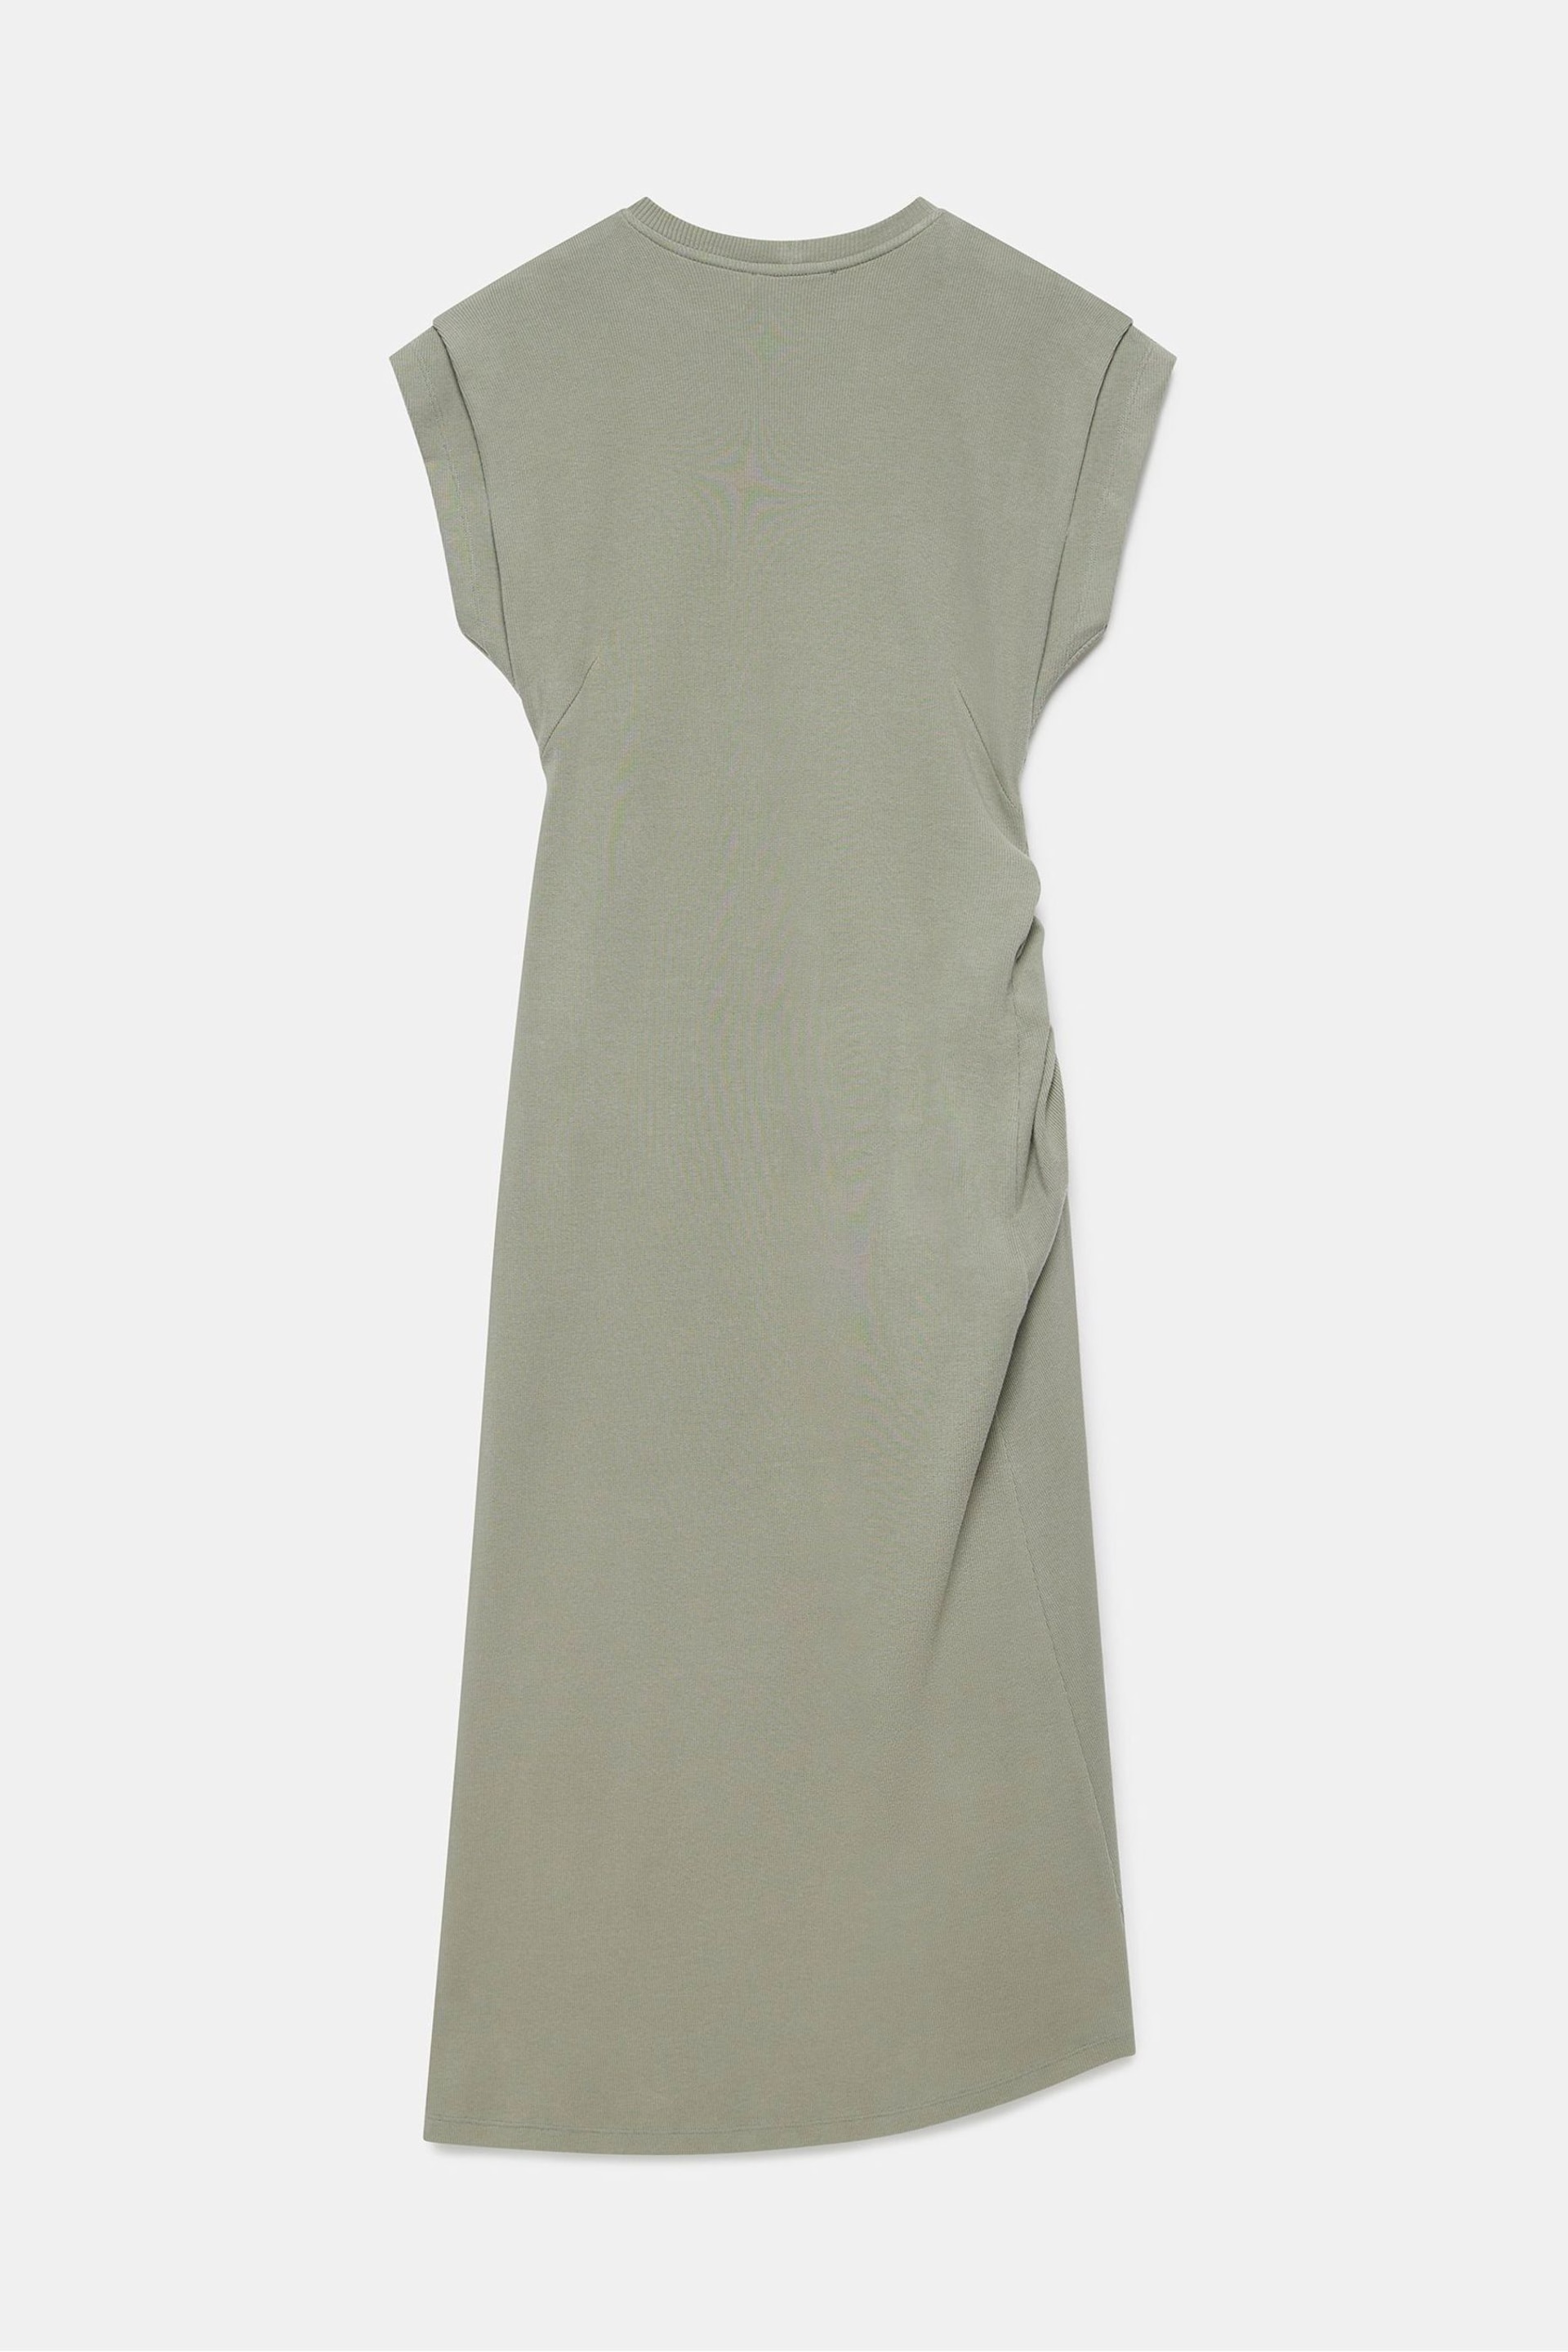 Mint Velvet Green Jersey Tie Midi Dress - Image 4 of 4